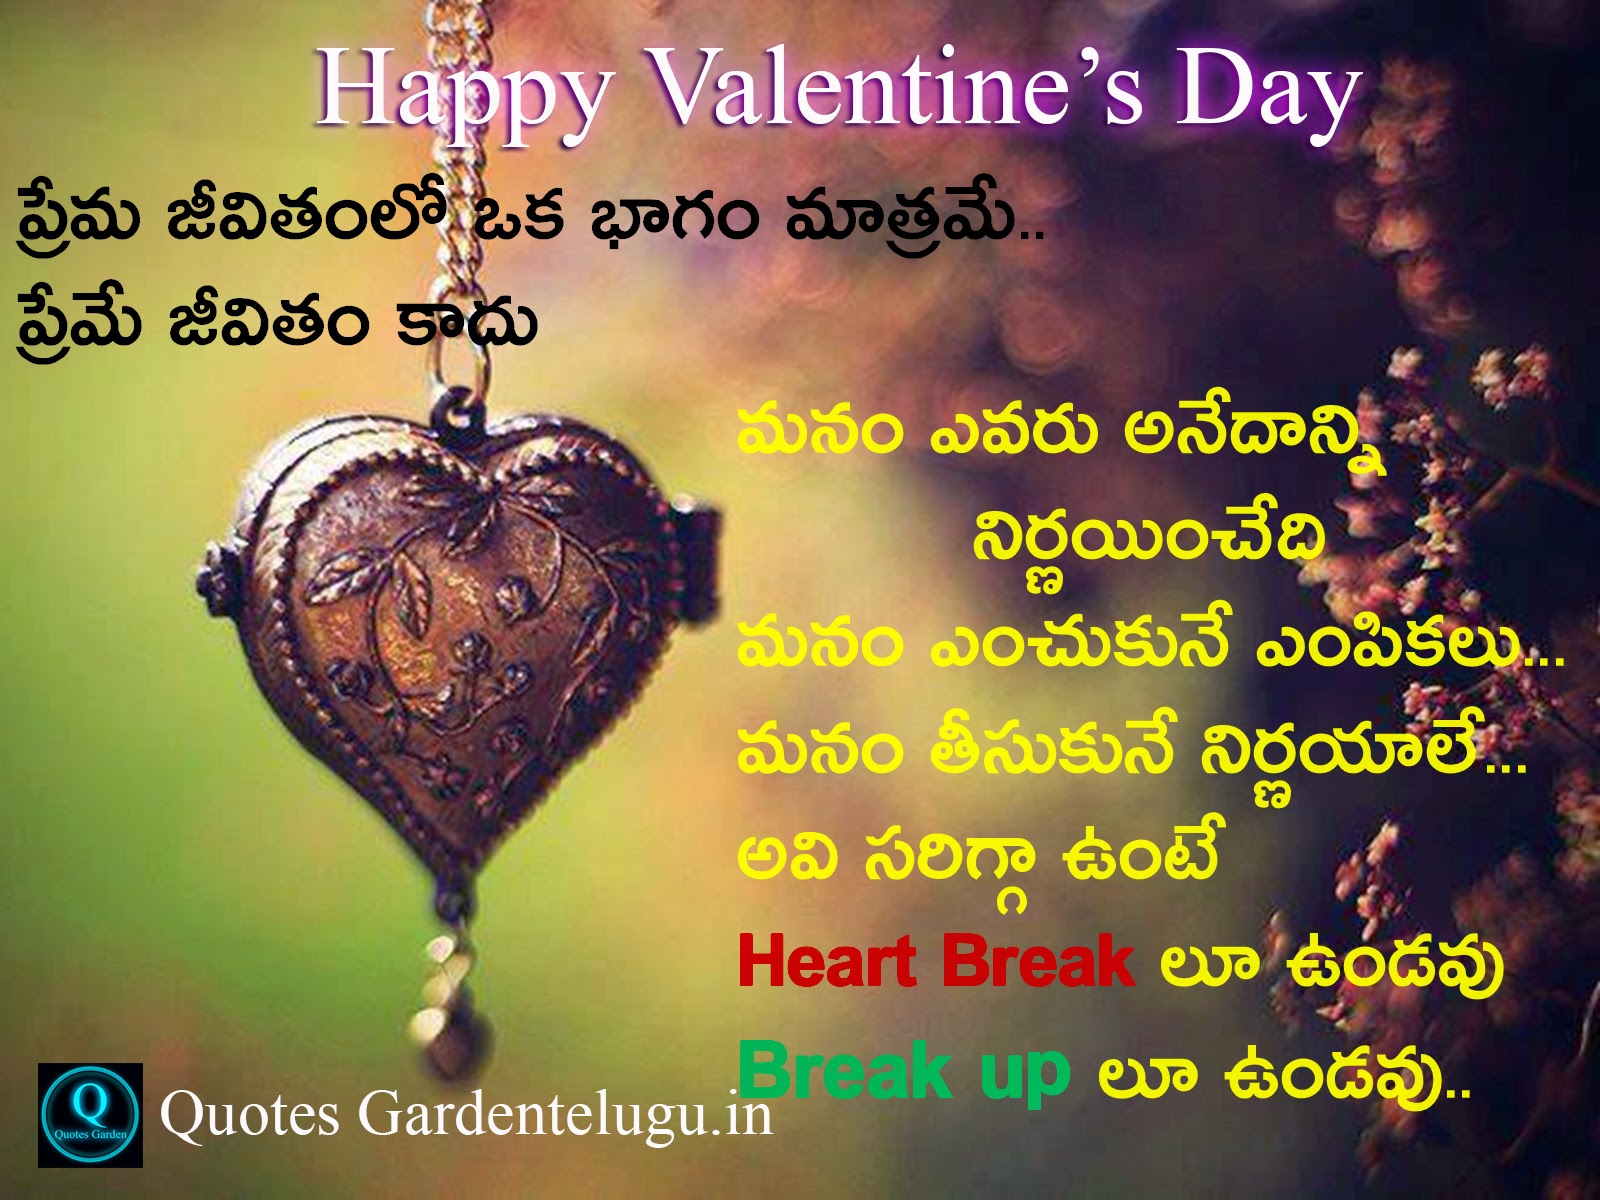 Happy Valentines Day Quotes in Telugu for Boyfriend